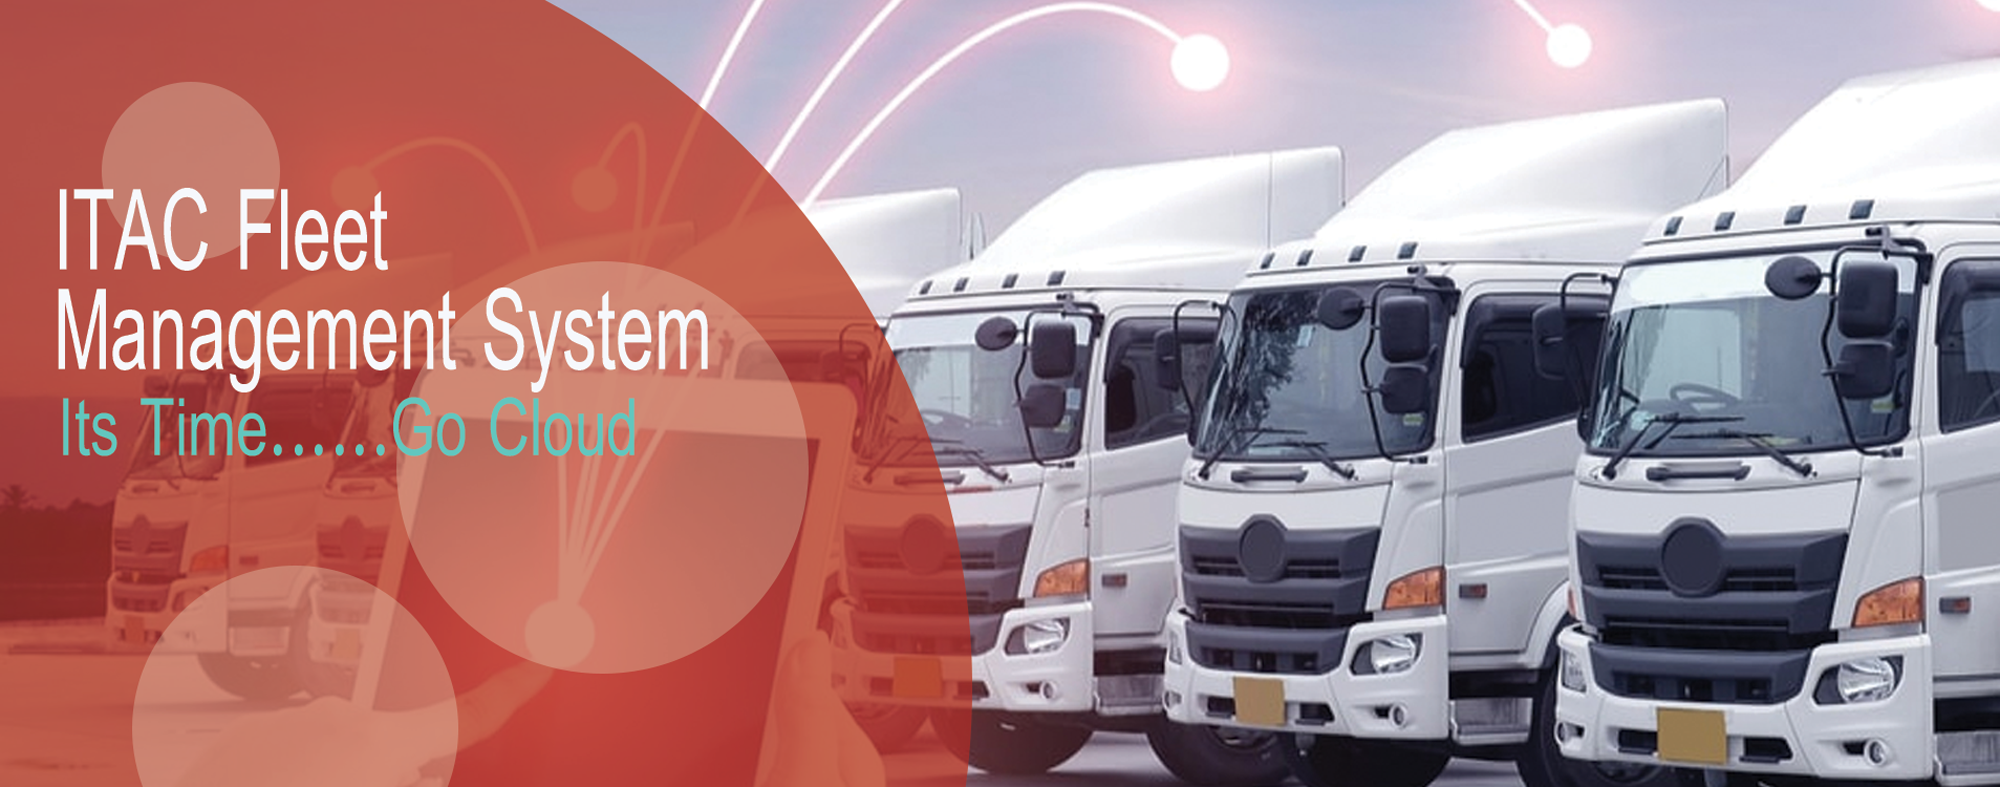 ITAC Fleet Management System